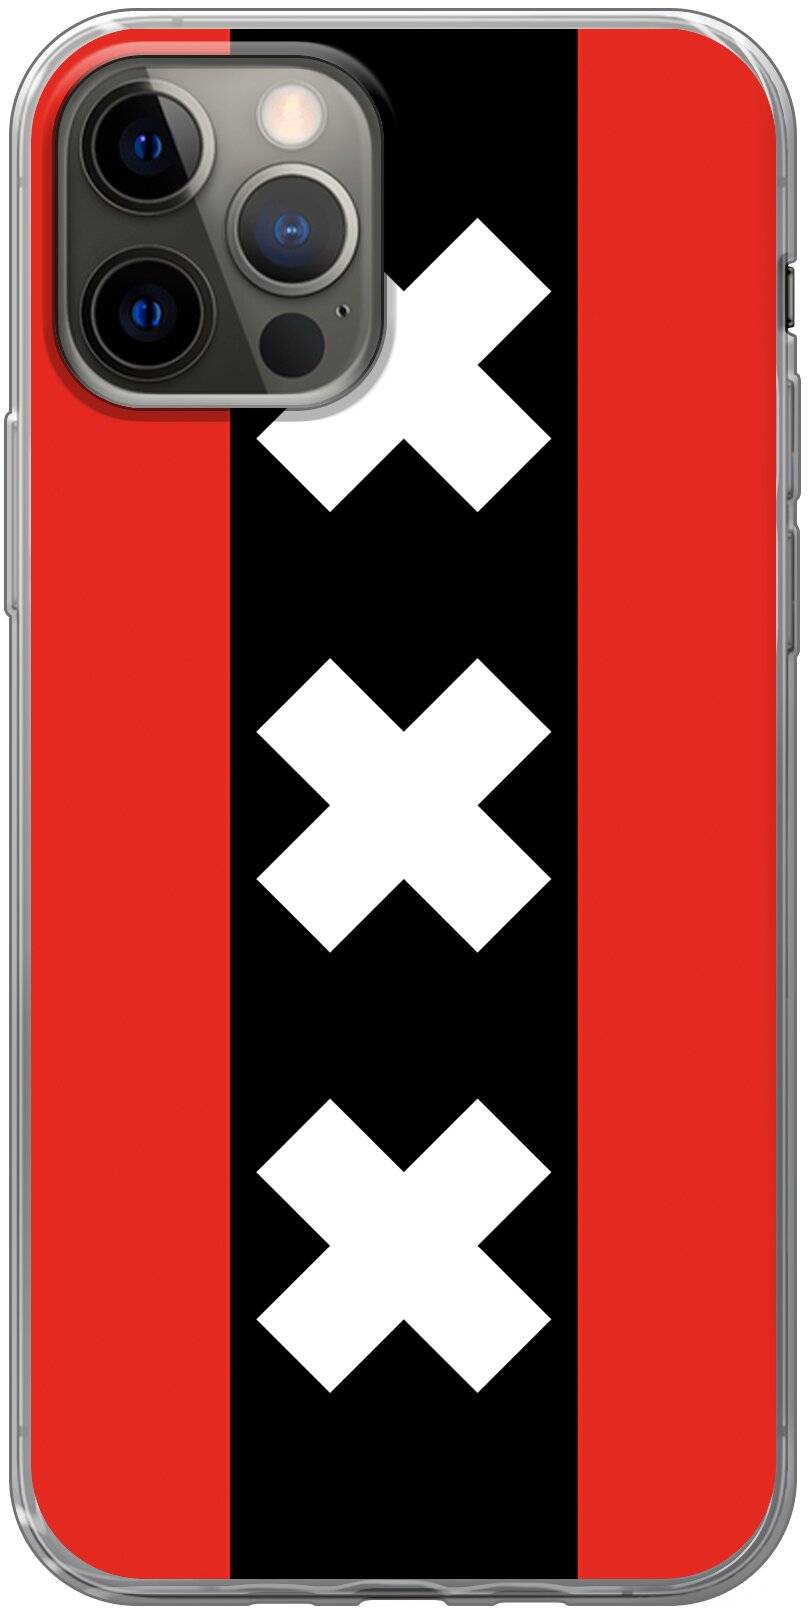 Amsterdamse vlag iPhone 12